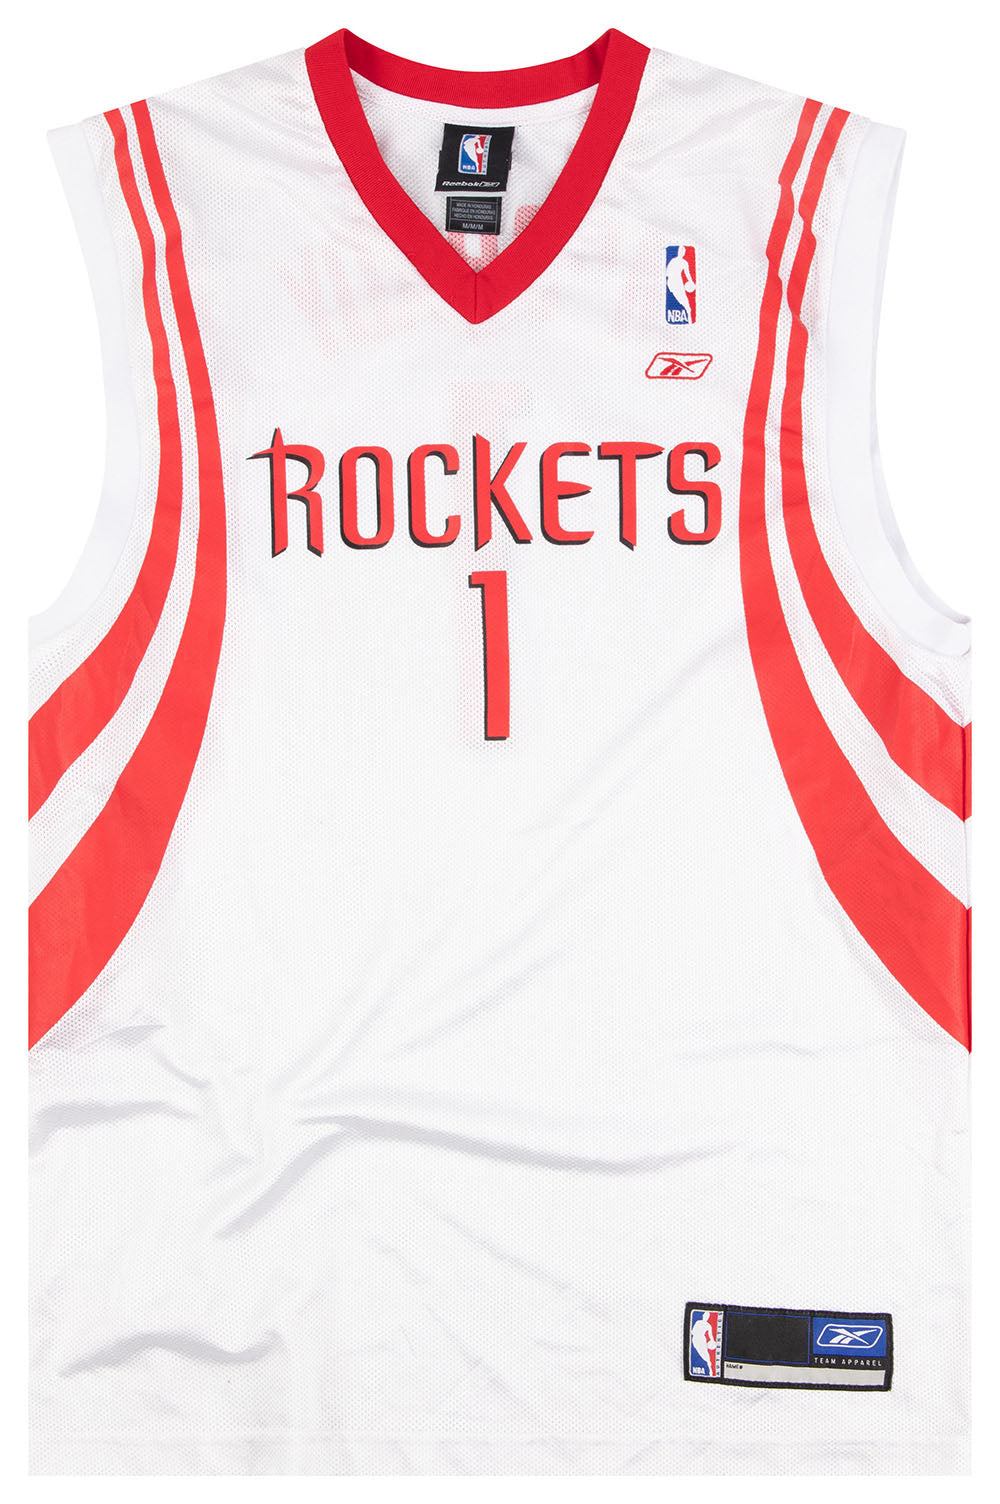 Houston Rockets Team Shop 